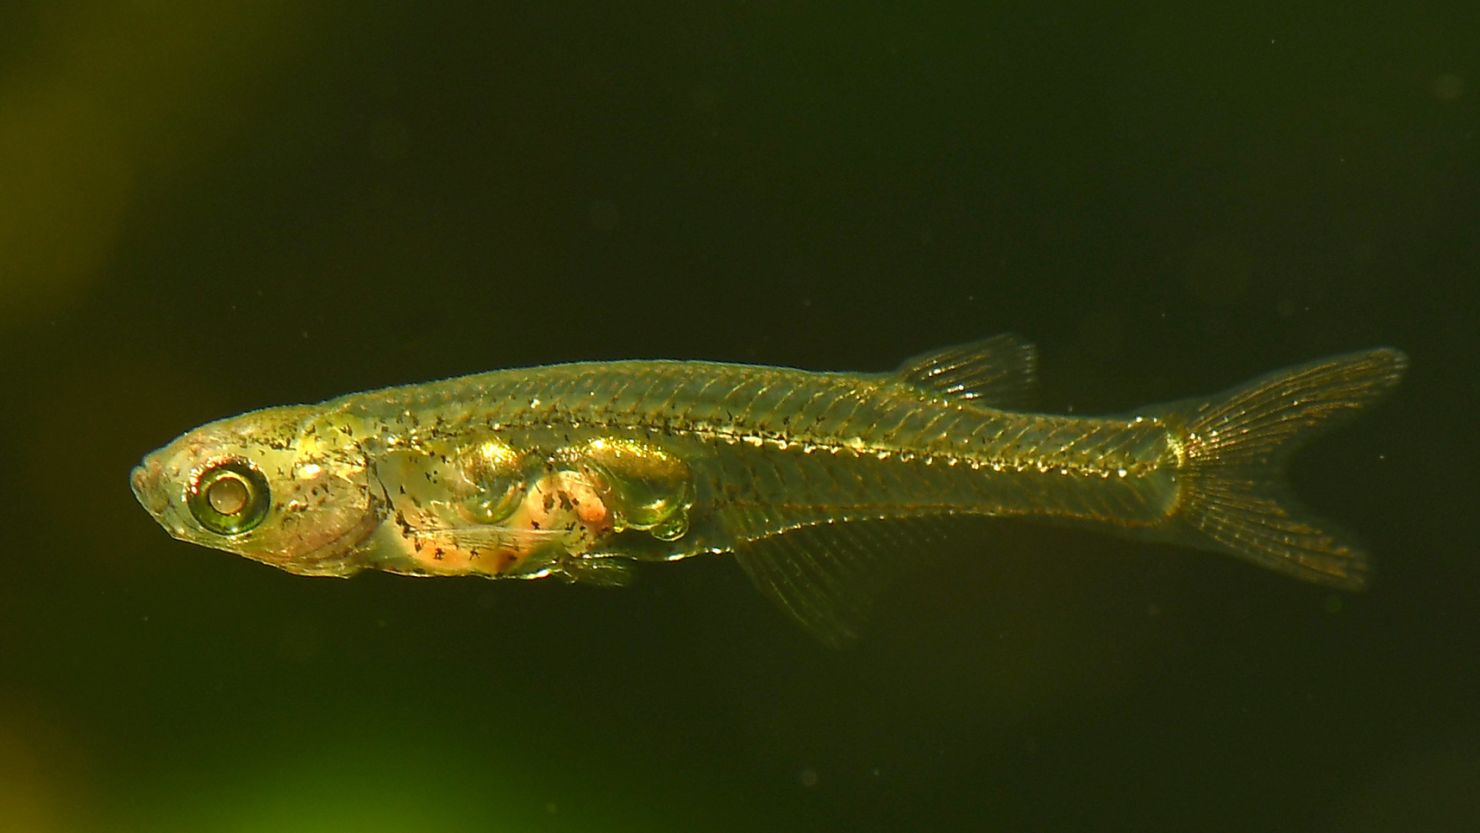 Danionella cerebrum live in shallow waters off Myanmar.